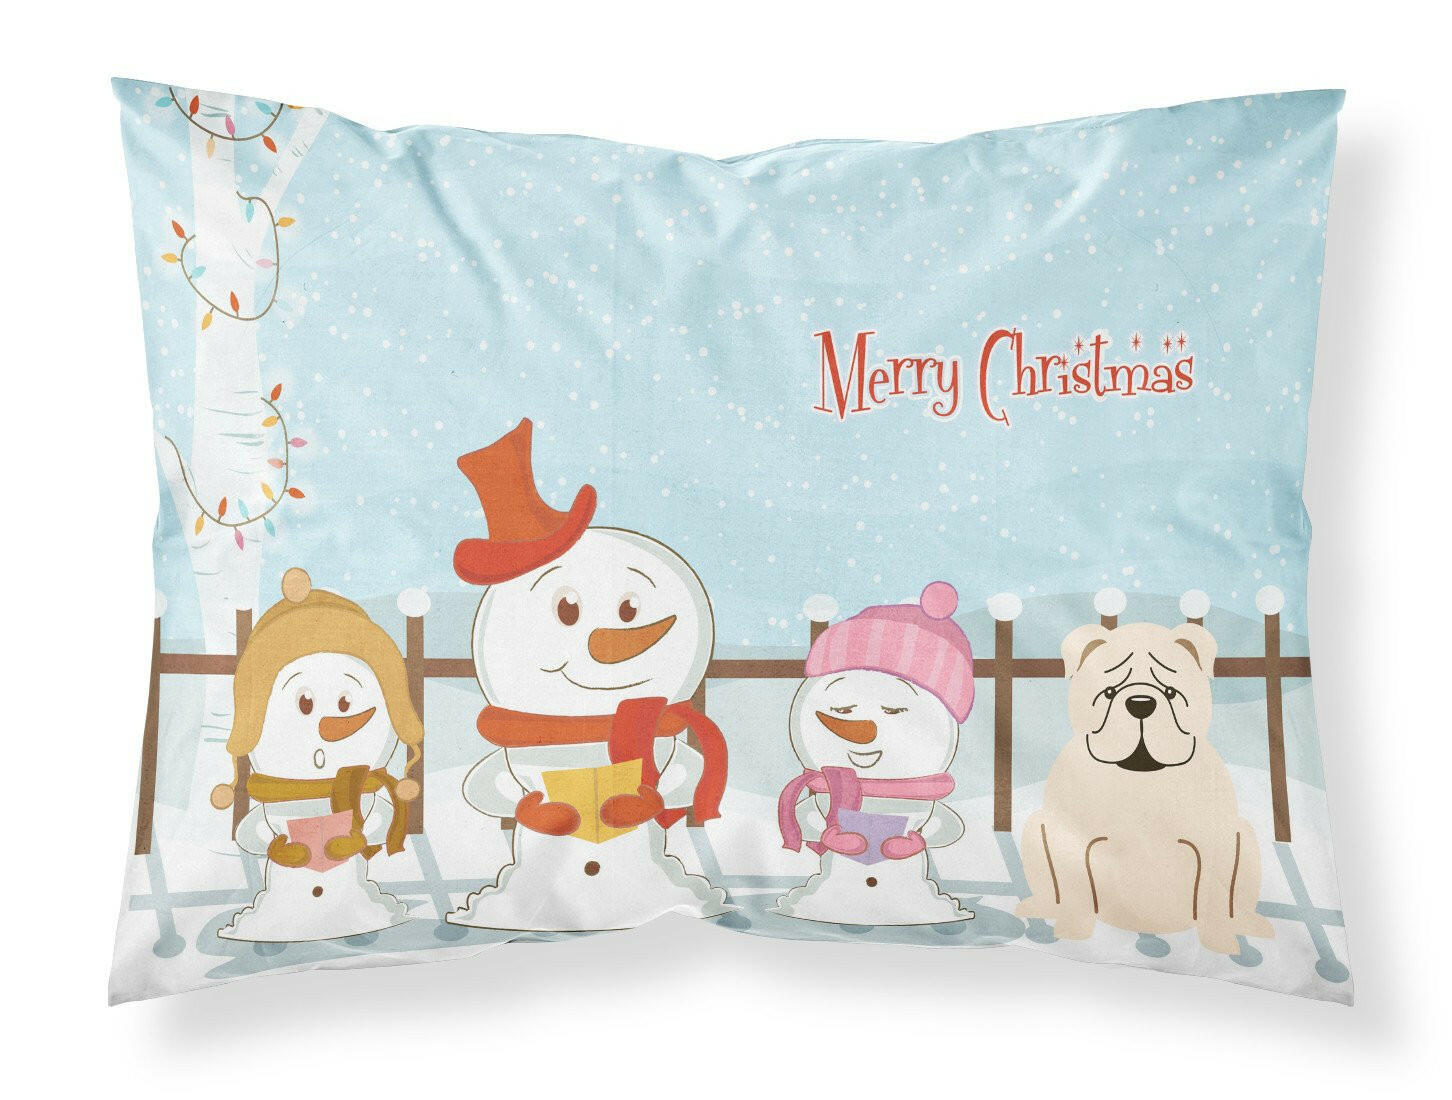 Merry Christmas Carolers English Bulldog White Fabric Standard Pillowcase BB2454PILLOWCASE by Caroline's Treasures